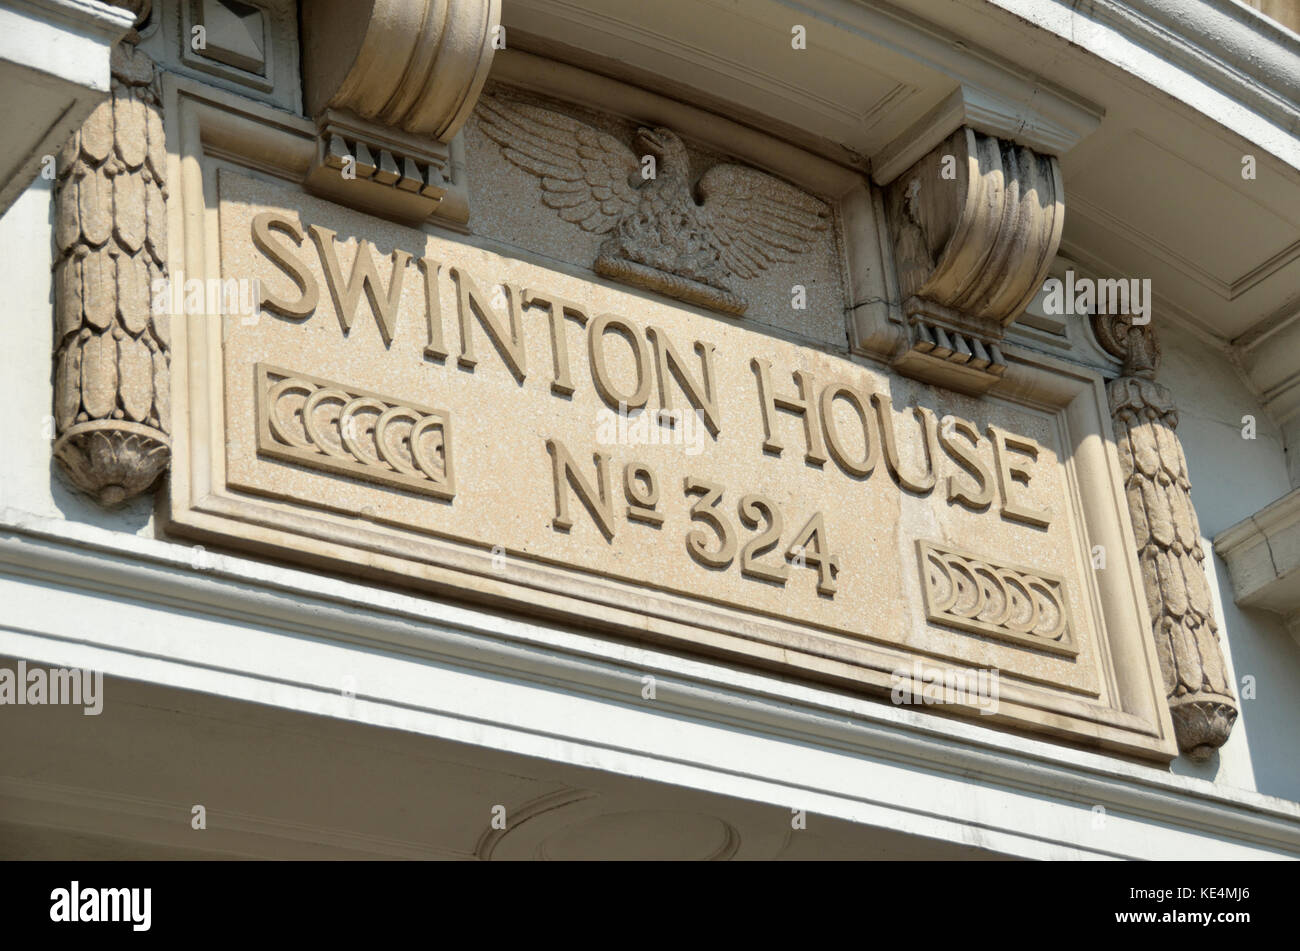 Swinton Haus in Gray's Inn Road, King's Cross, London, UK. Stockfoto